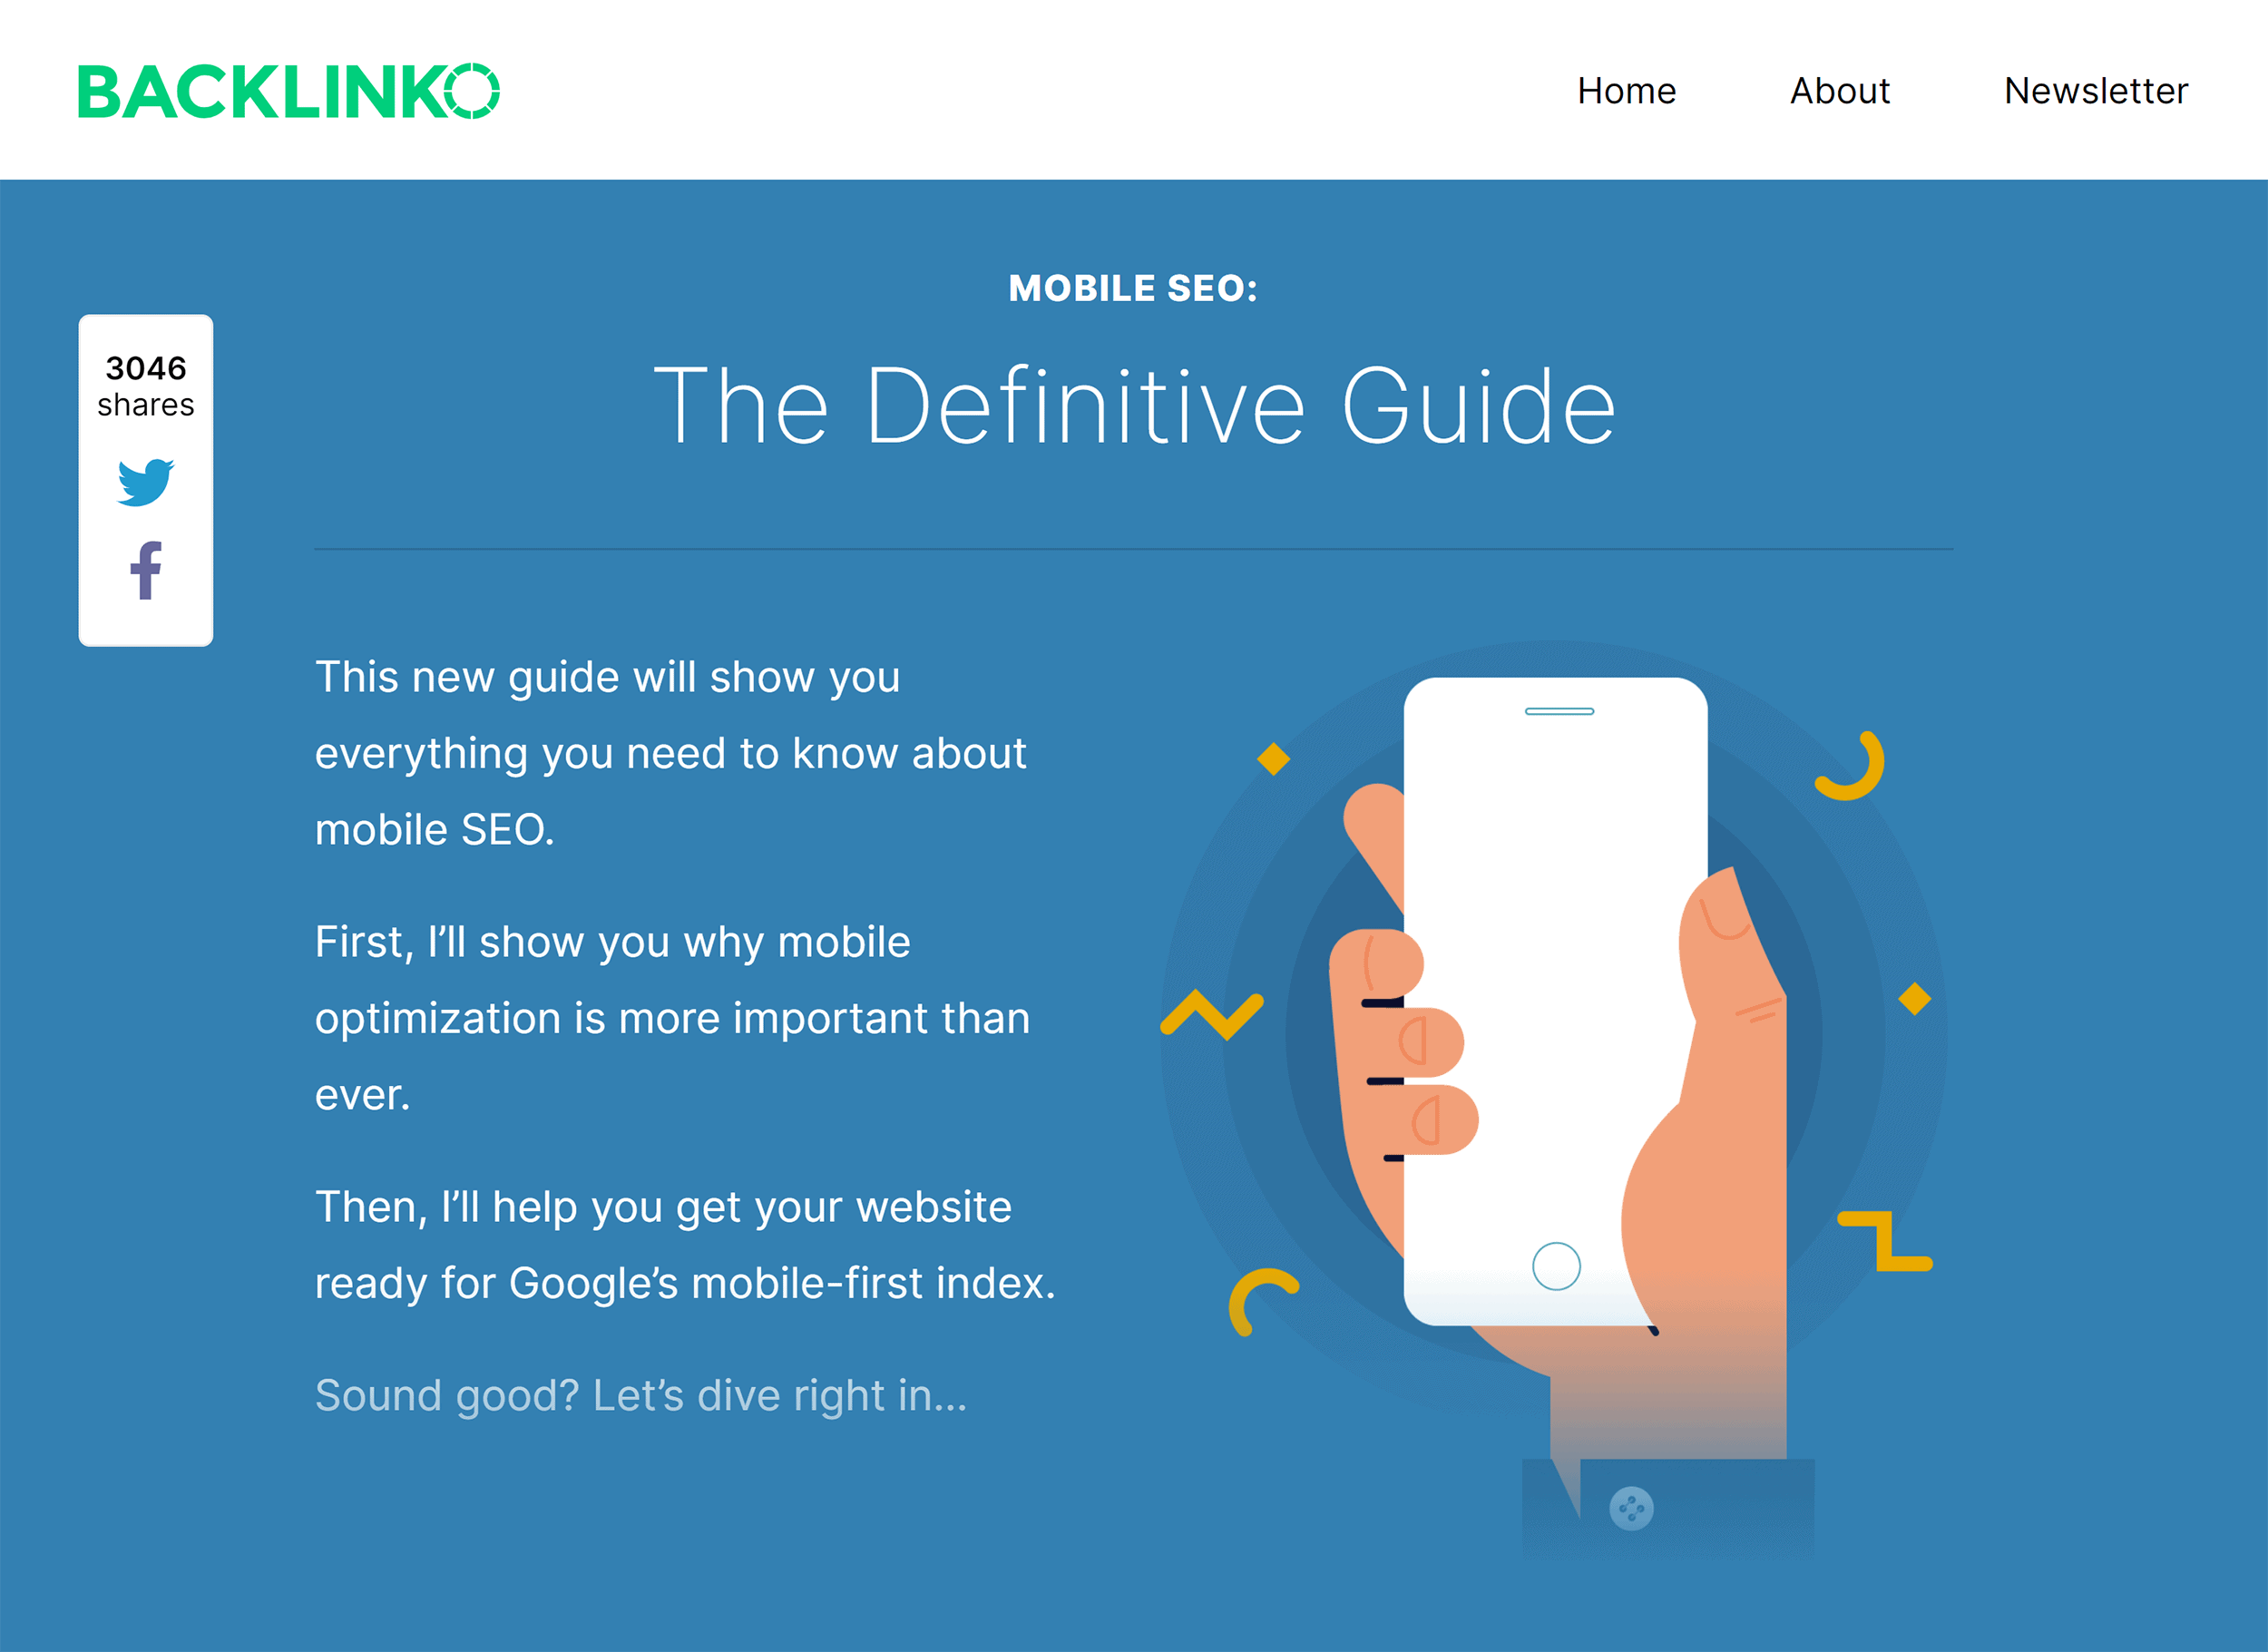 Backlinko – Mobile SEO guide